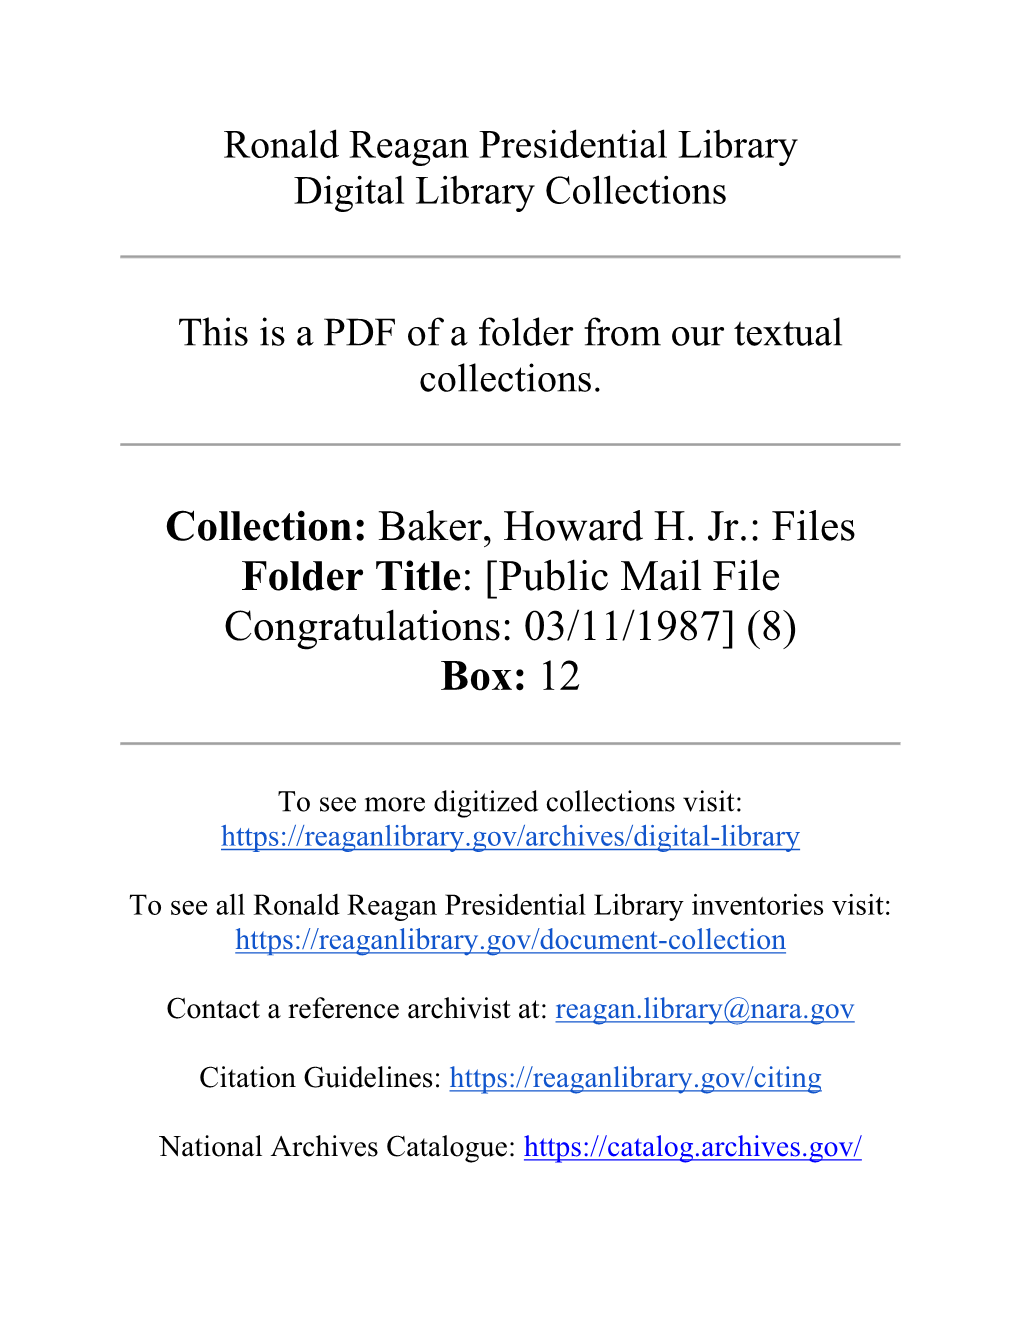 Collection: Baker, Howard H. Jr.: Files Folder Title: [Public Mail File Congratulations: 03/11/1987] (8) Box: 12